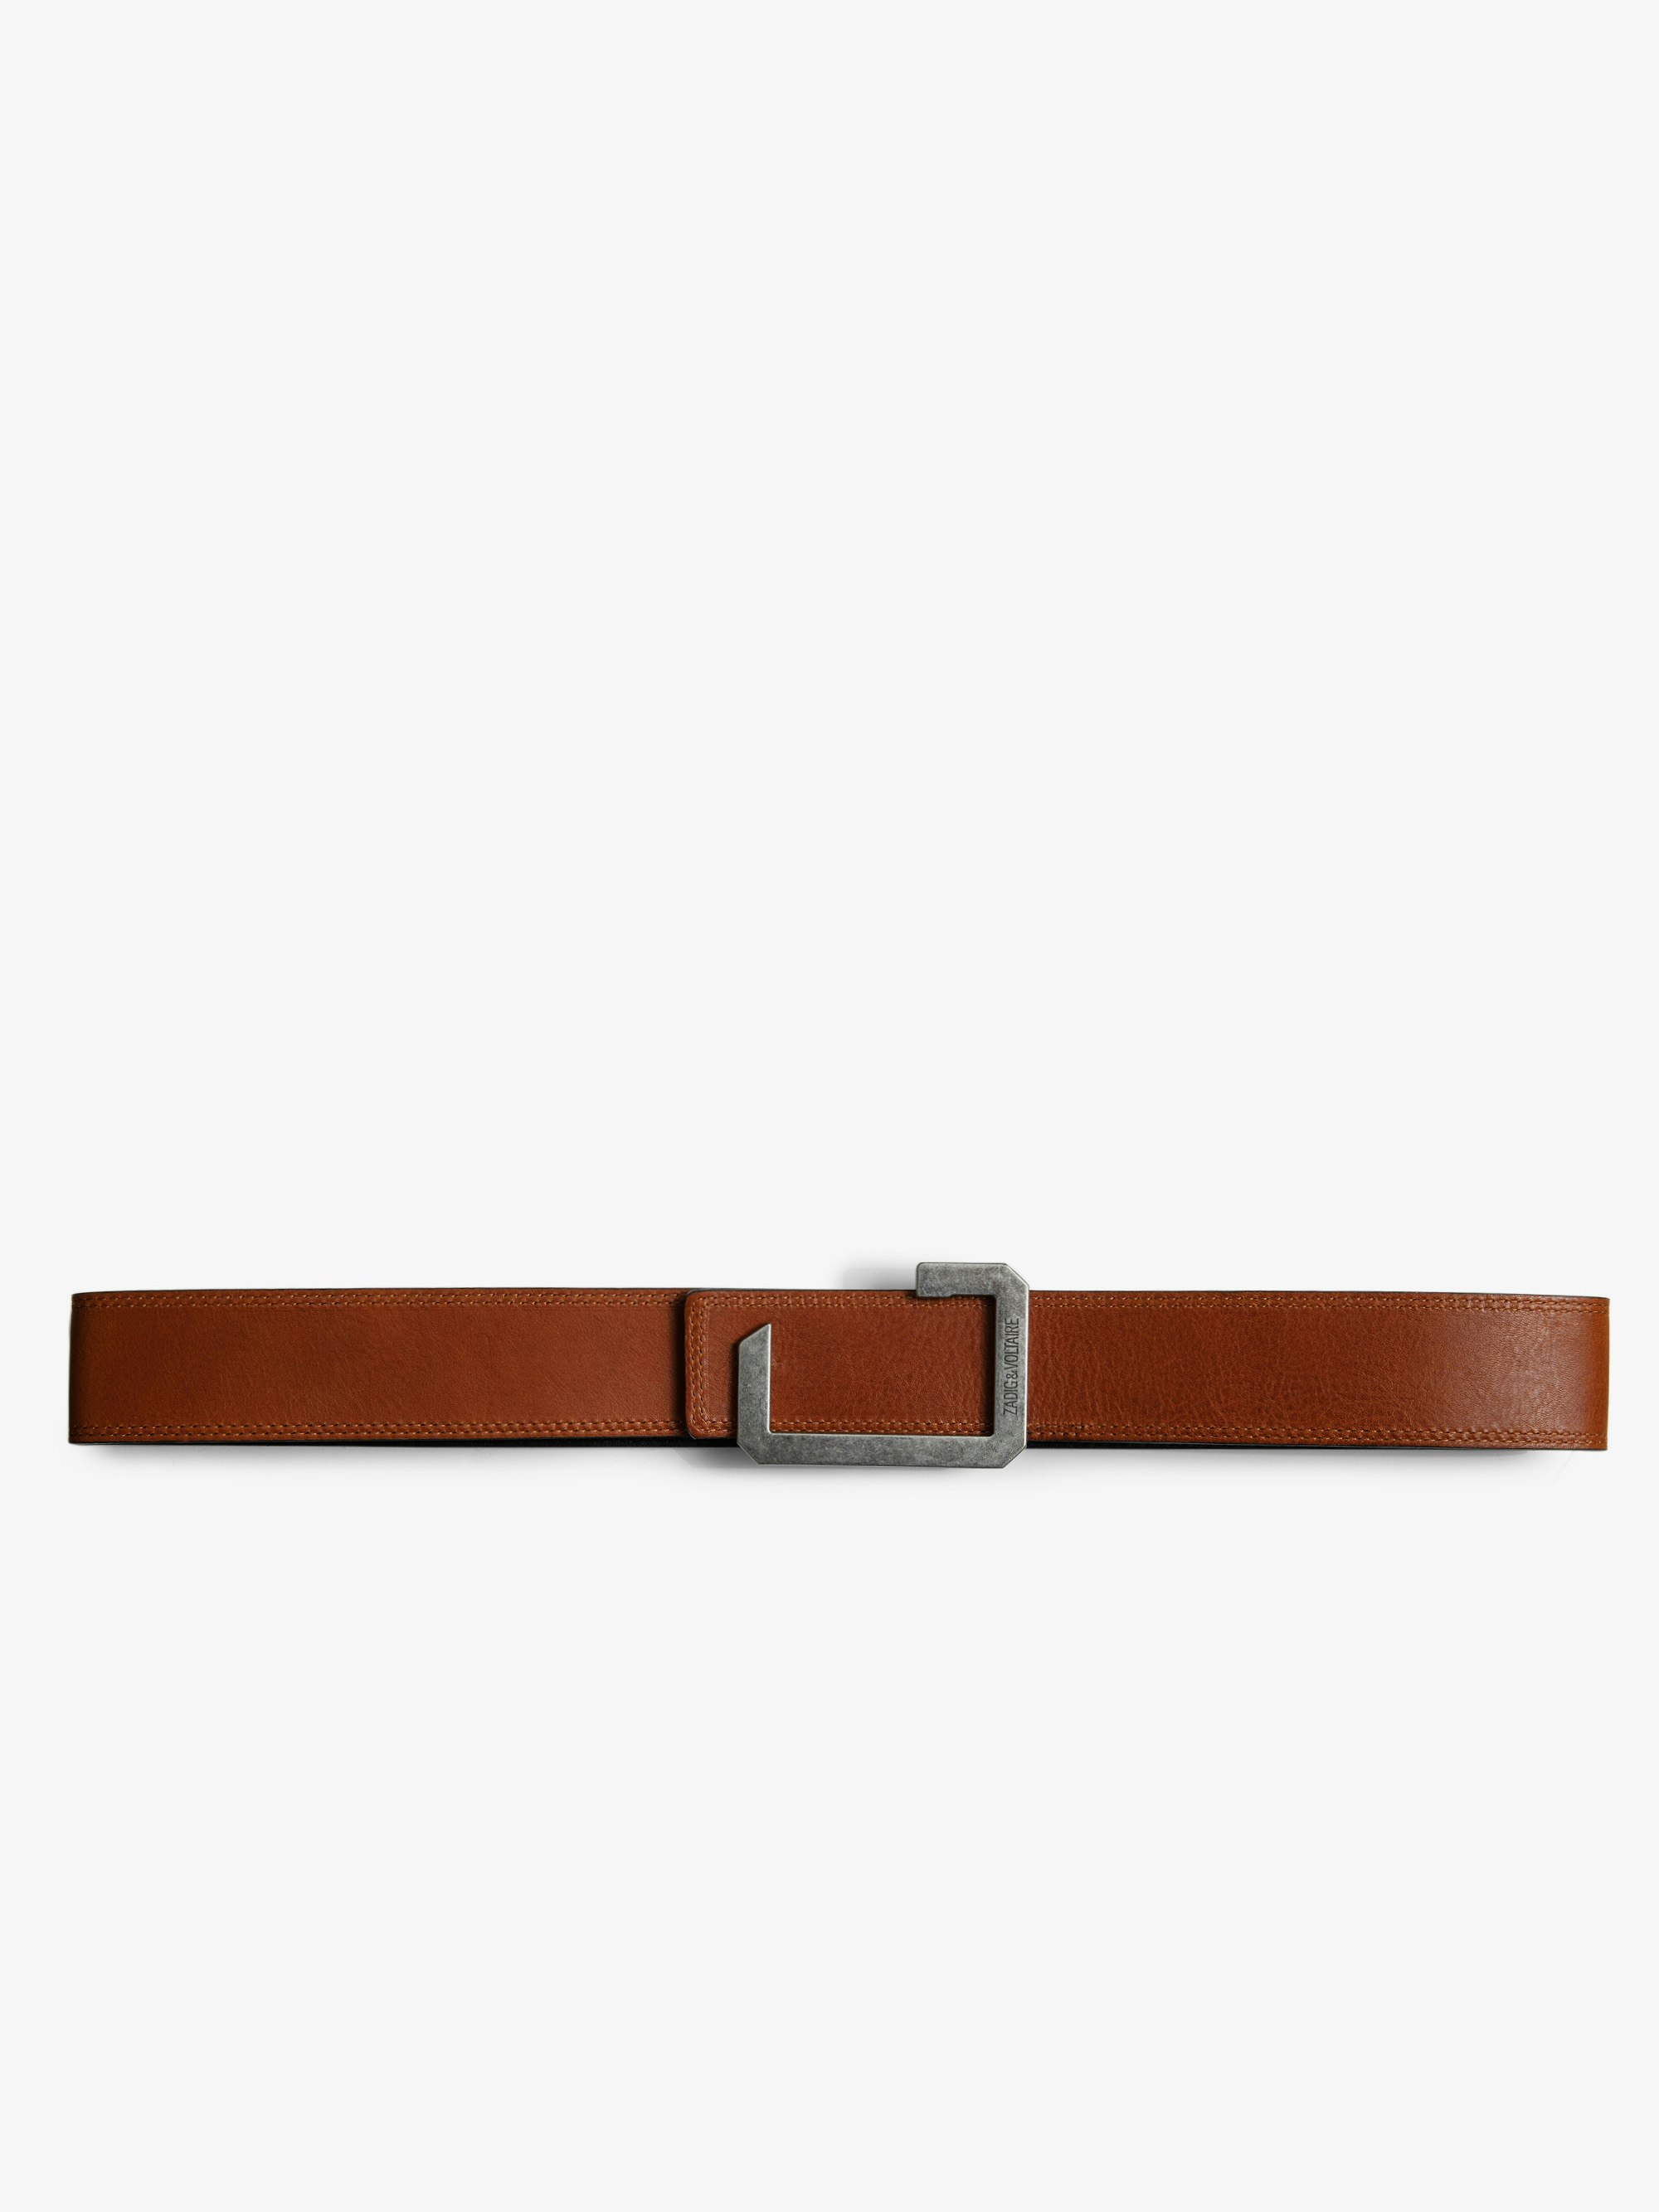 The Reversible Belt - Men's reversible cognac leather belt.